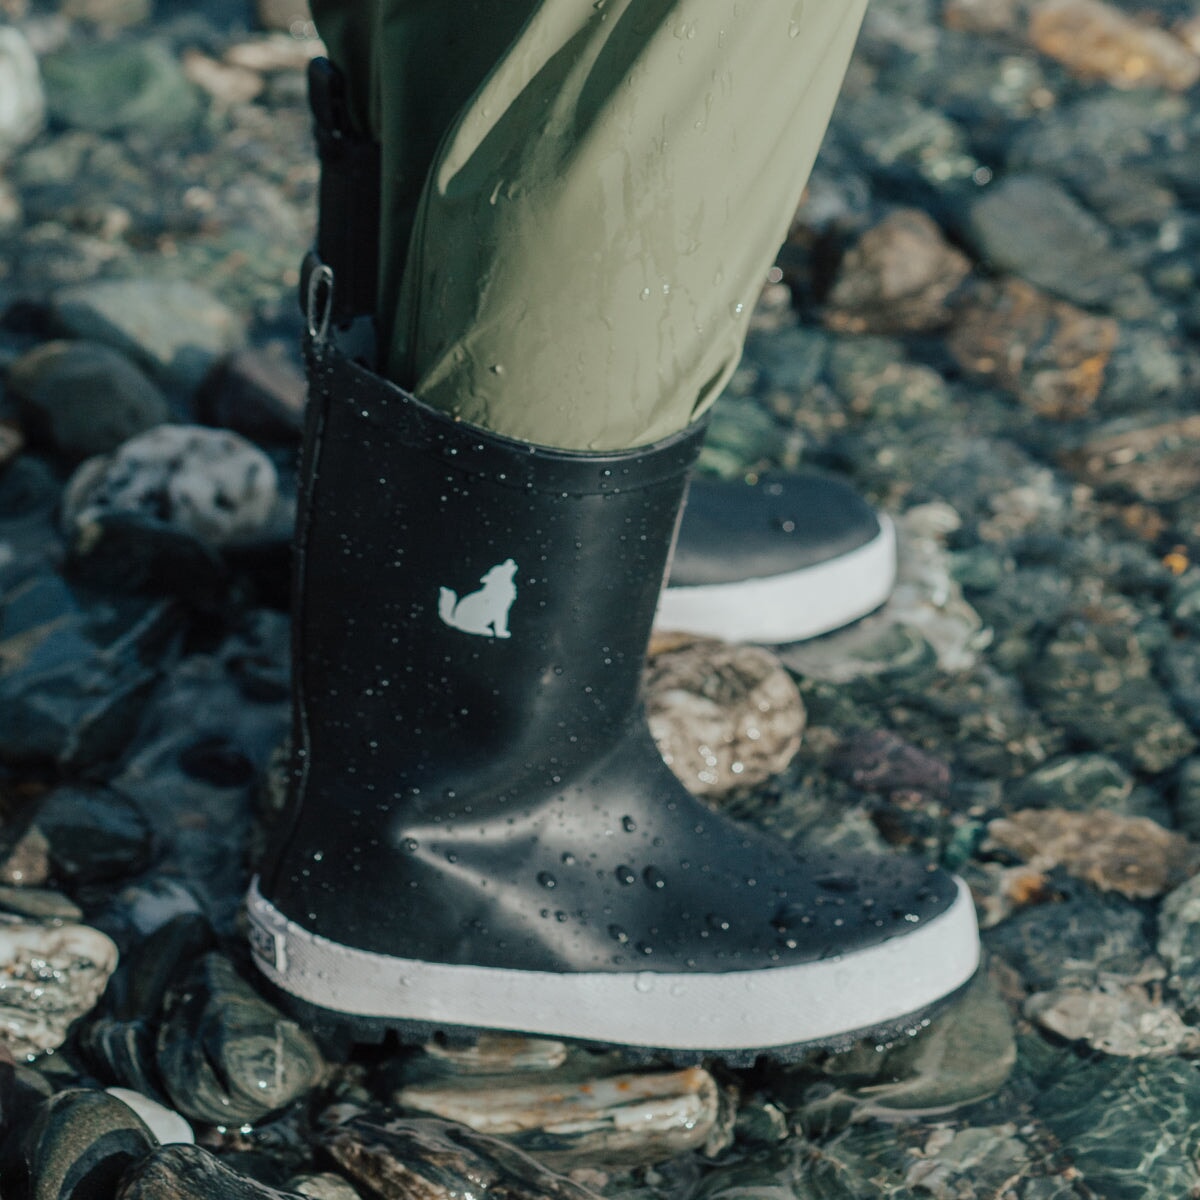 Rain Boots - Black